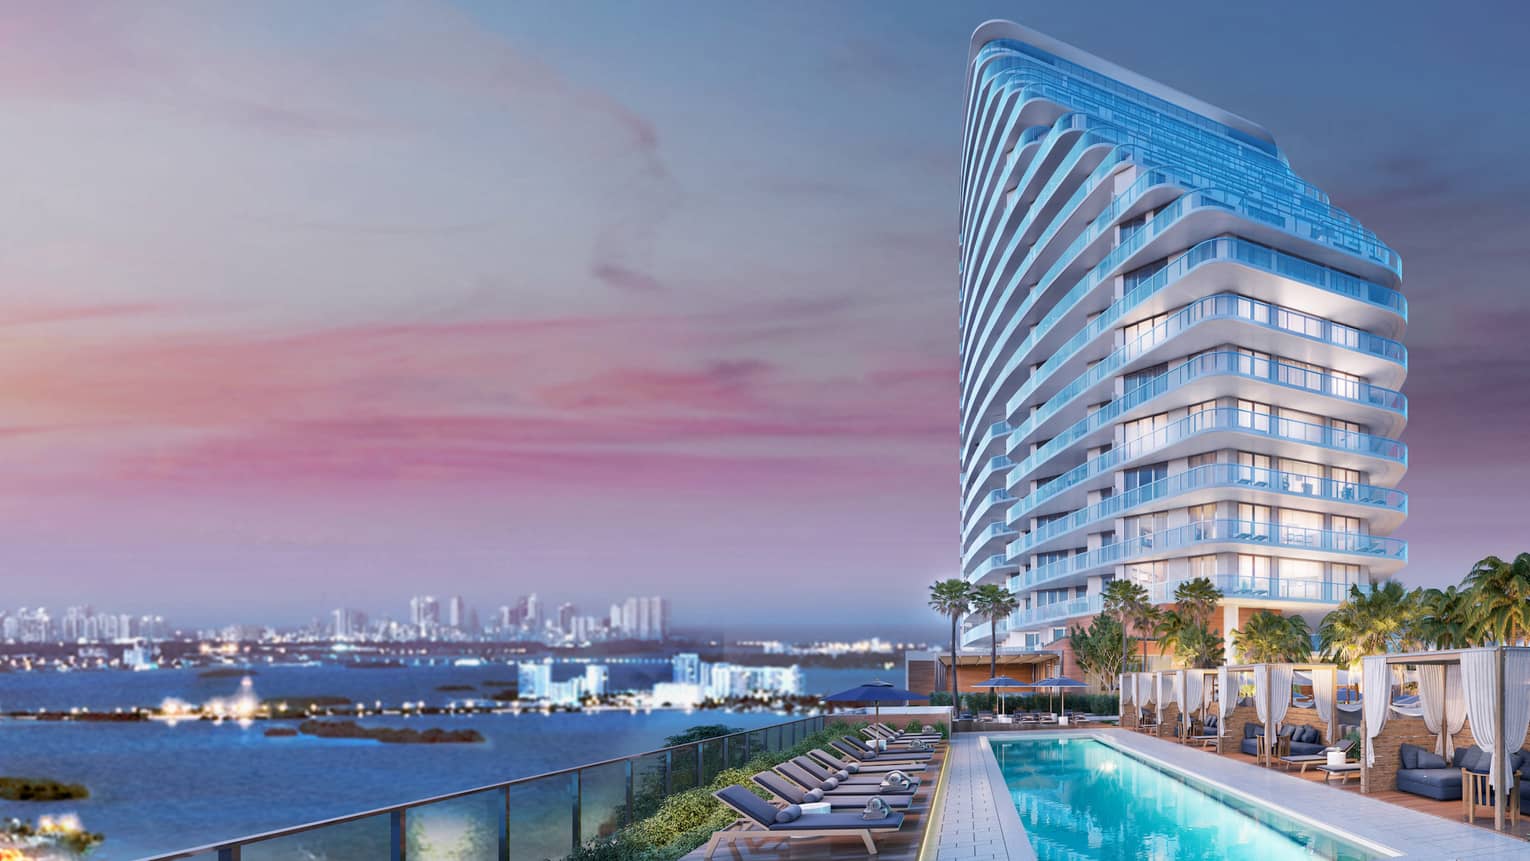 Reggie Saylor Real Estate Four Seasons Fort Lauderdale Hotel Private Residences